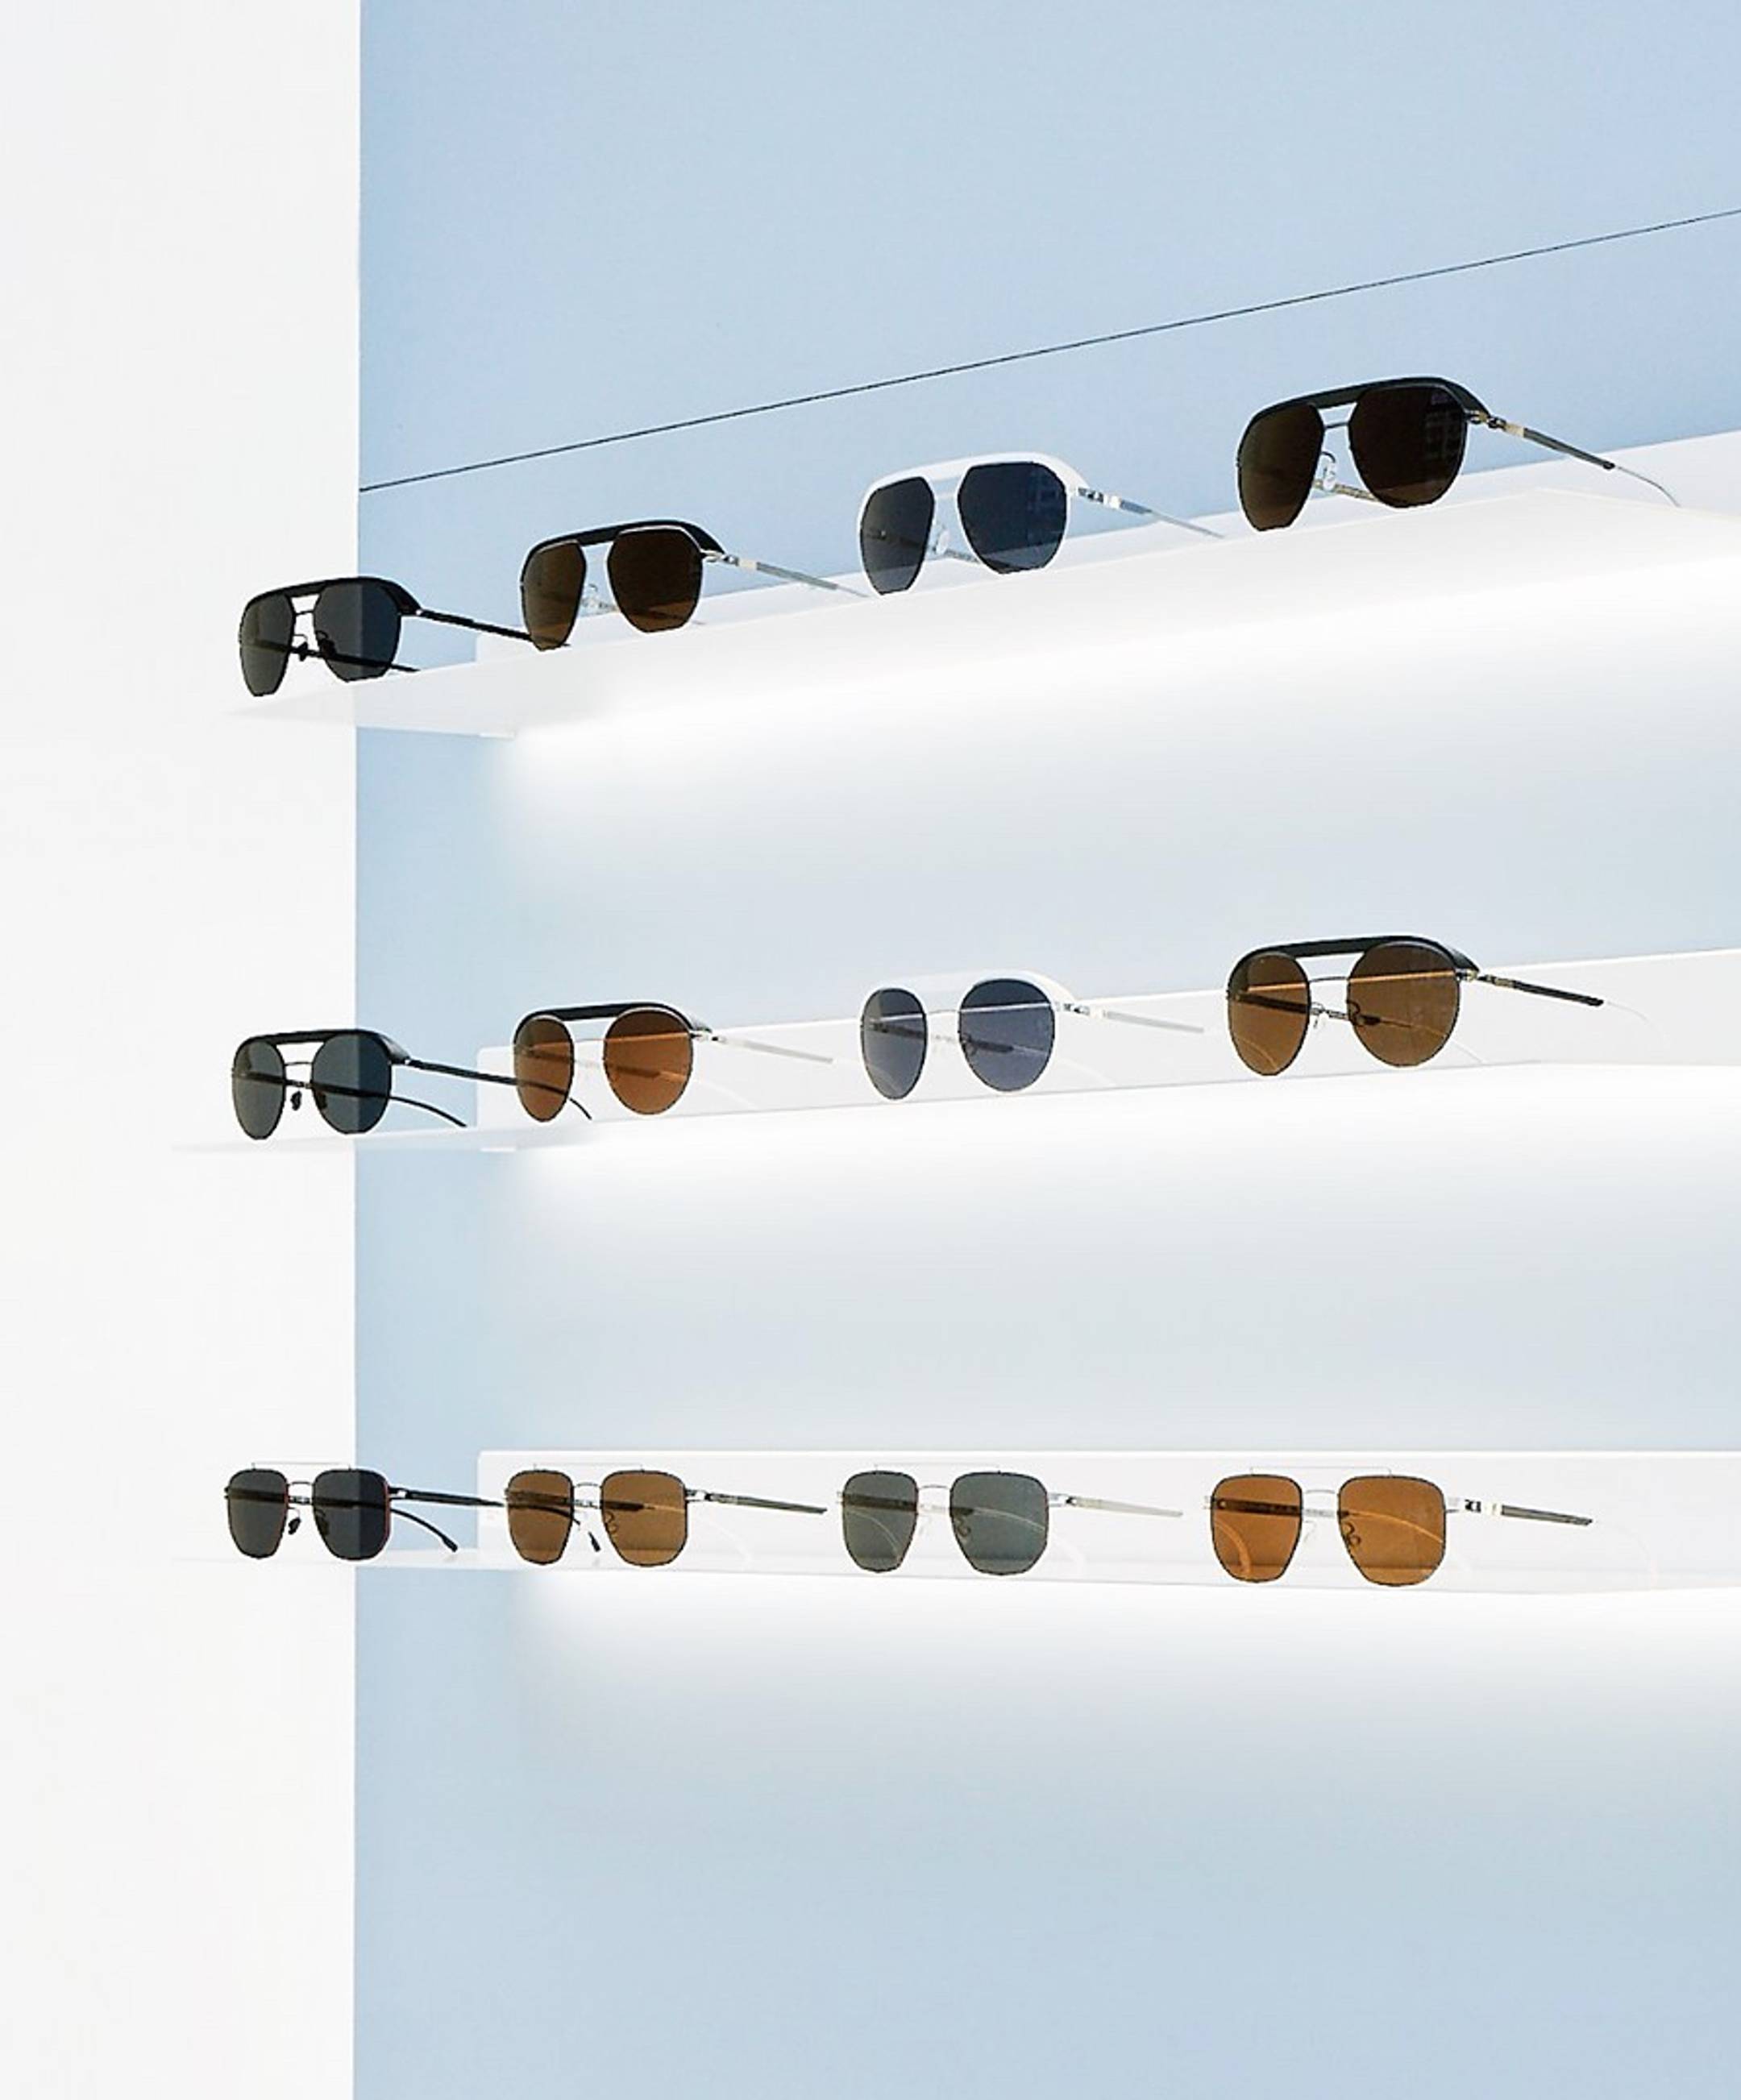 Shelf with multiple pairs of Mykita sunglasses